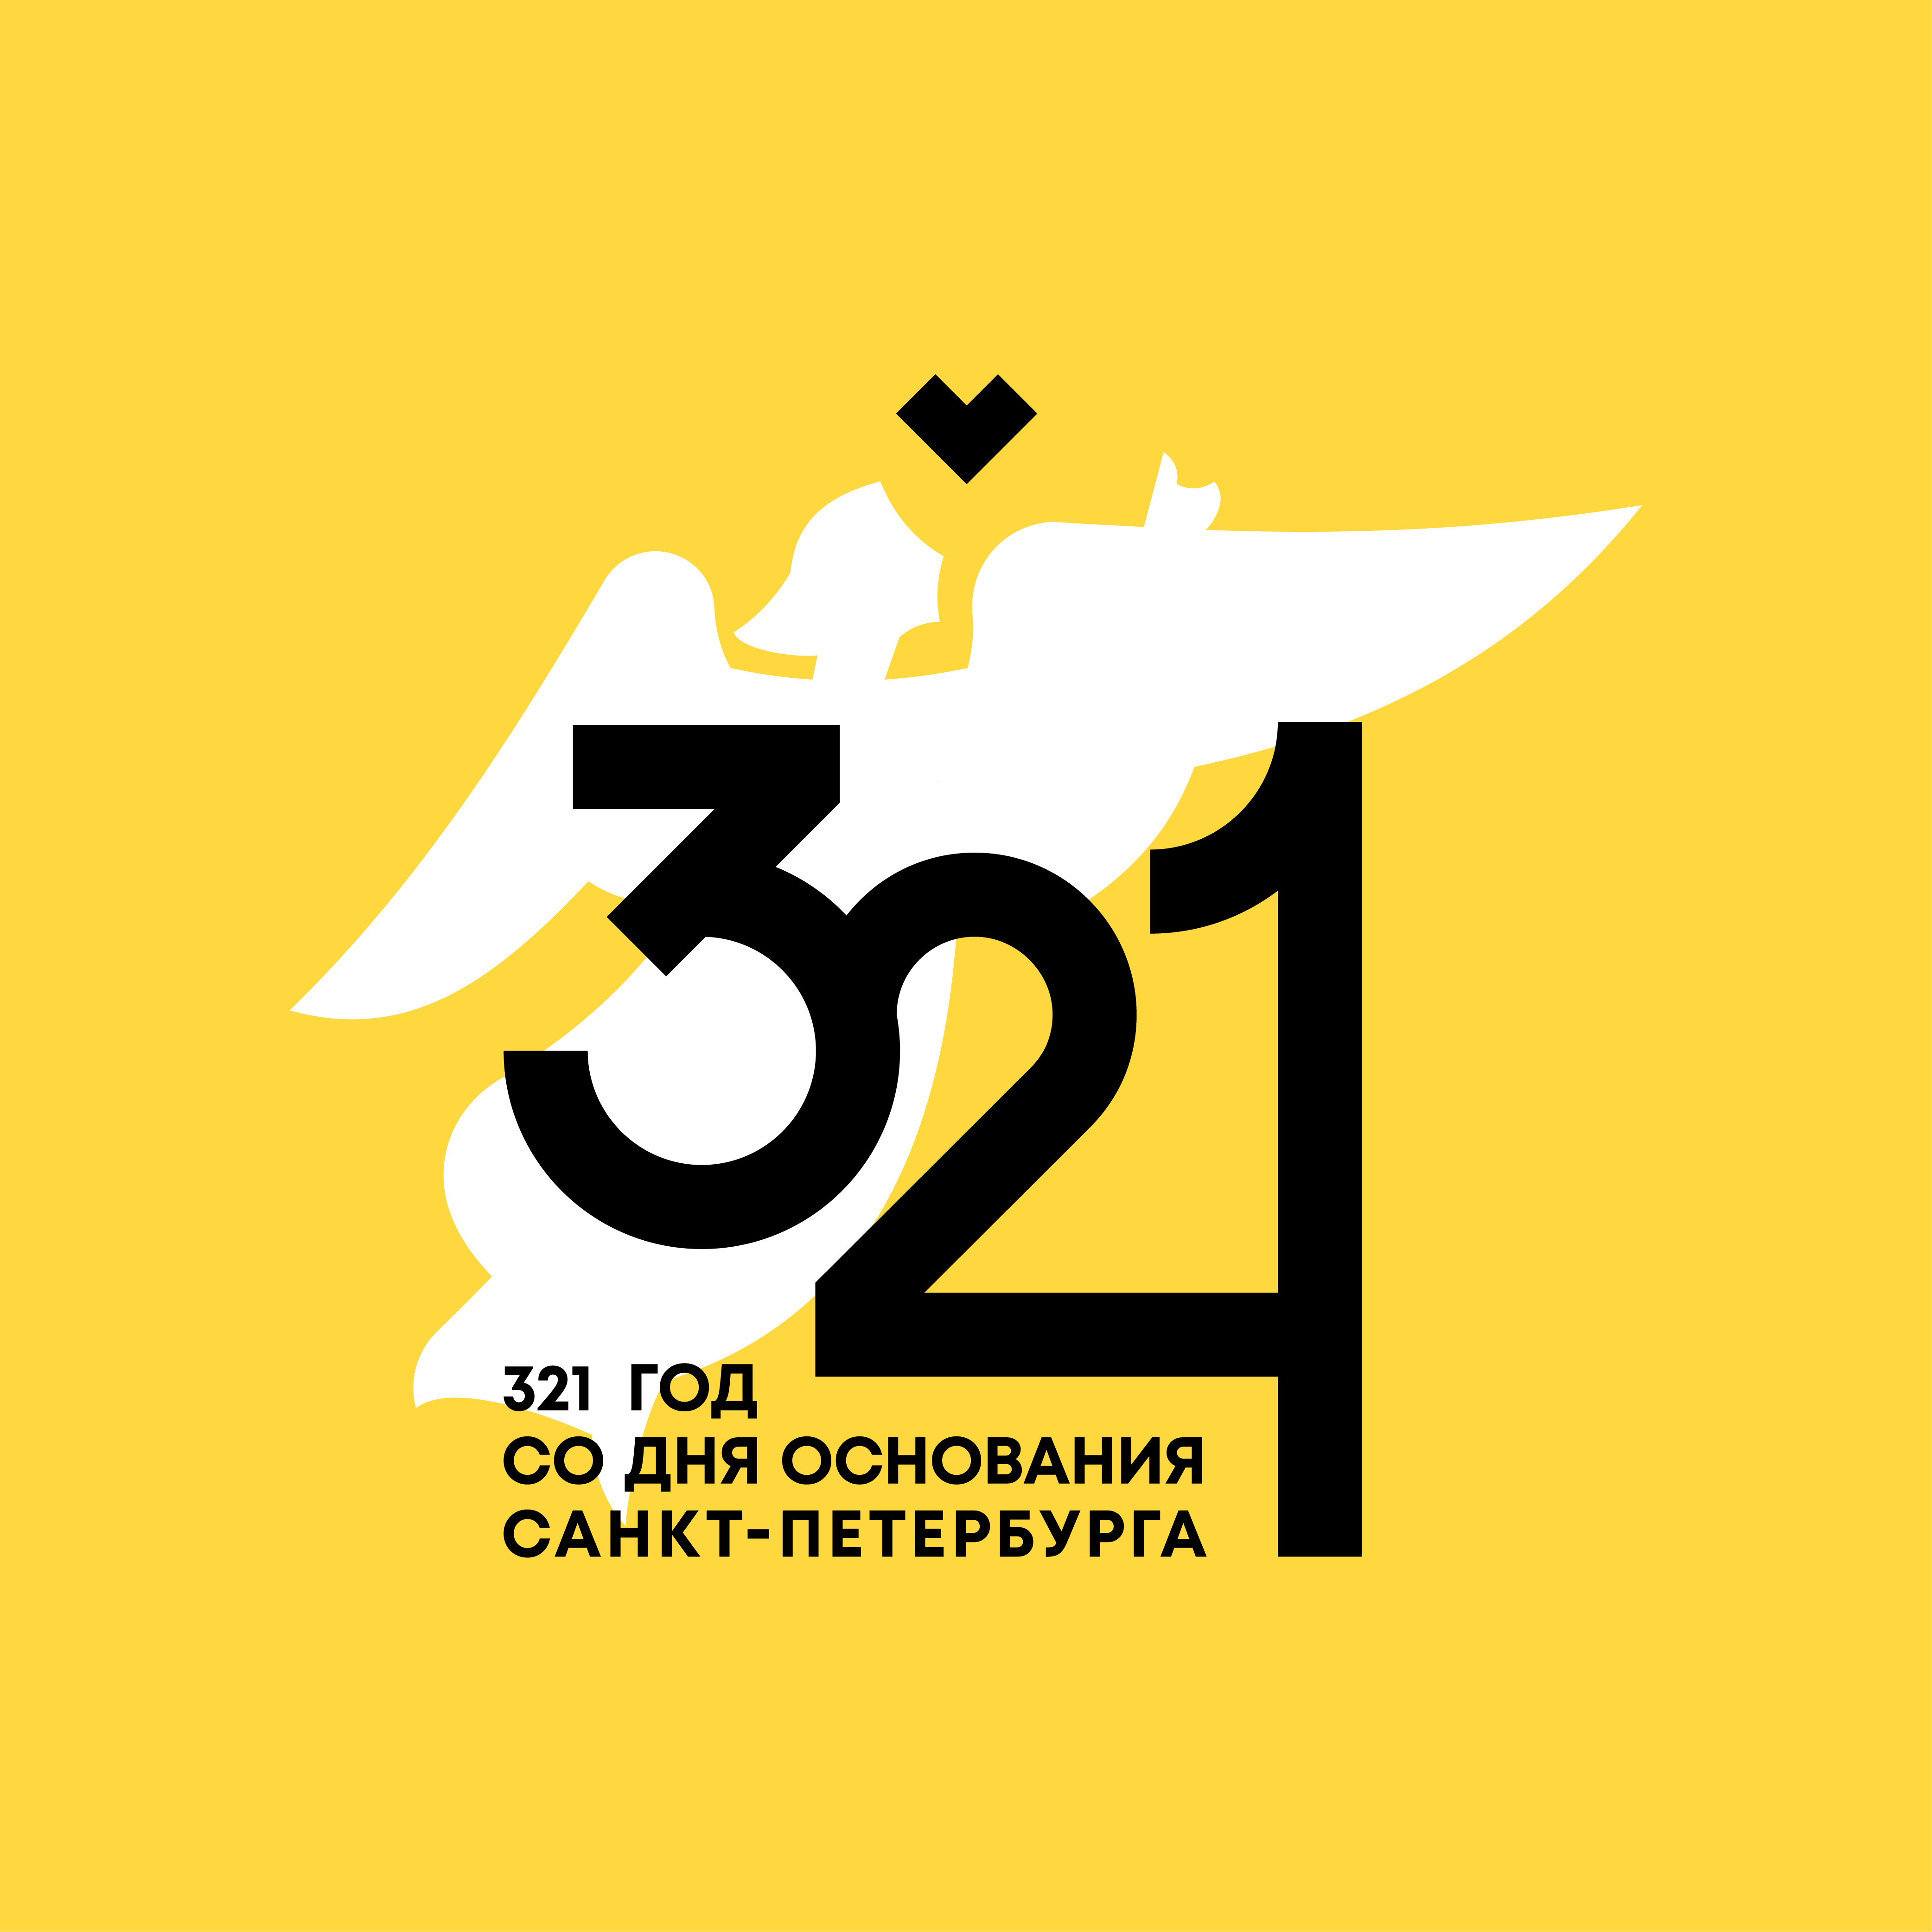 321 logo black yellow